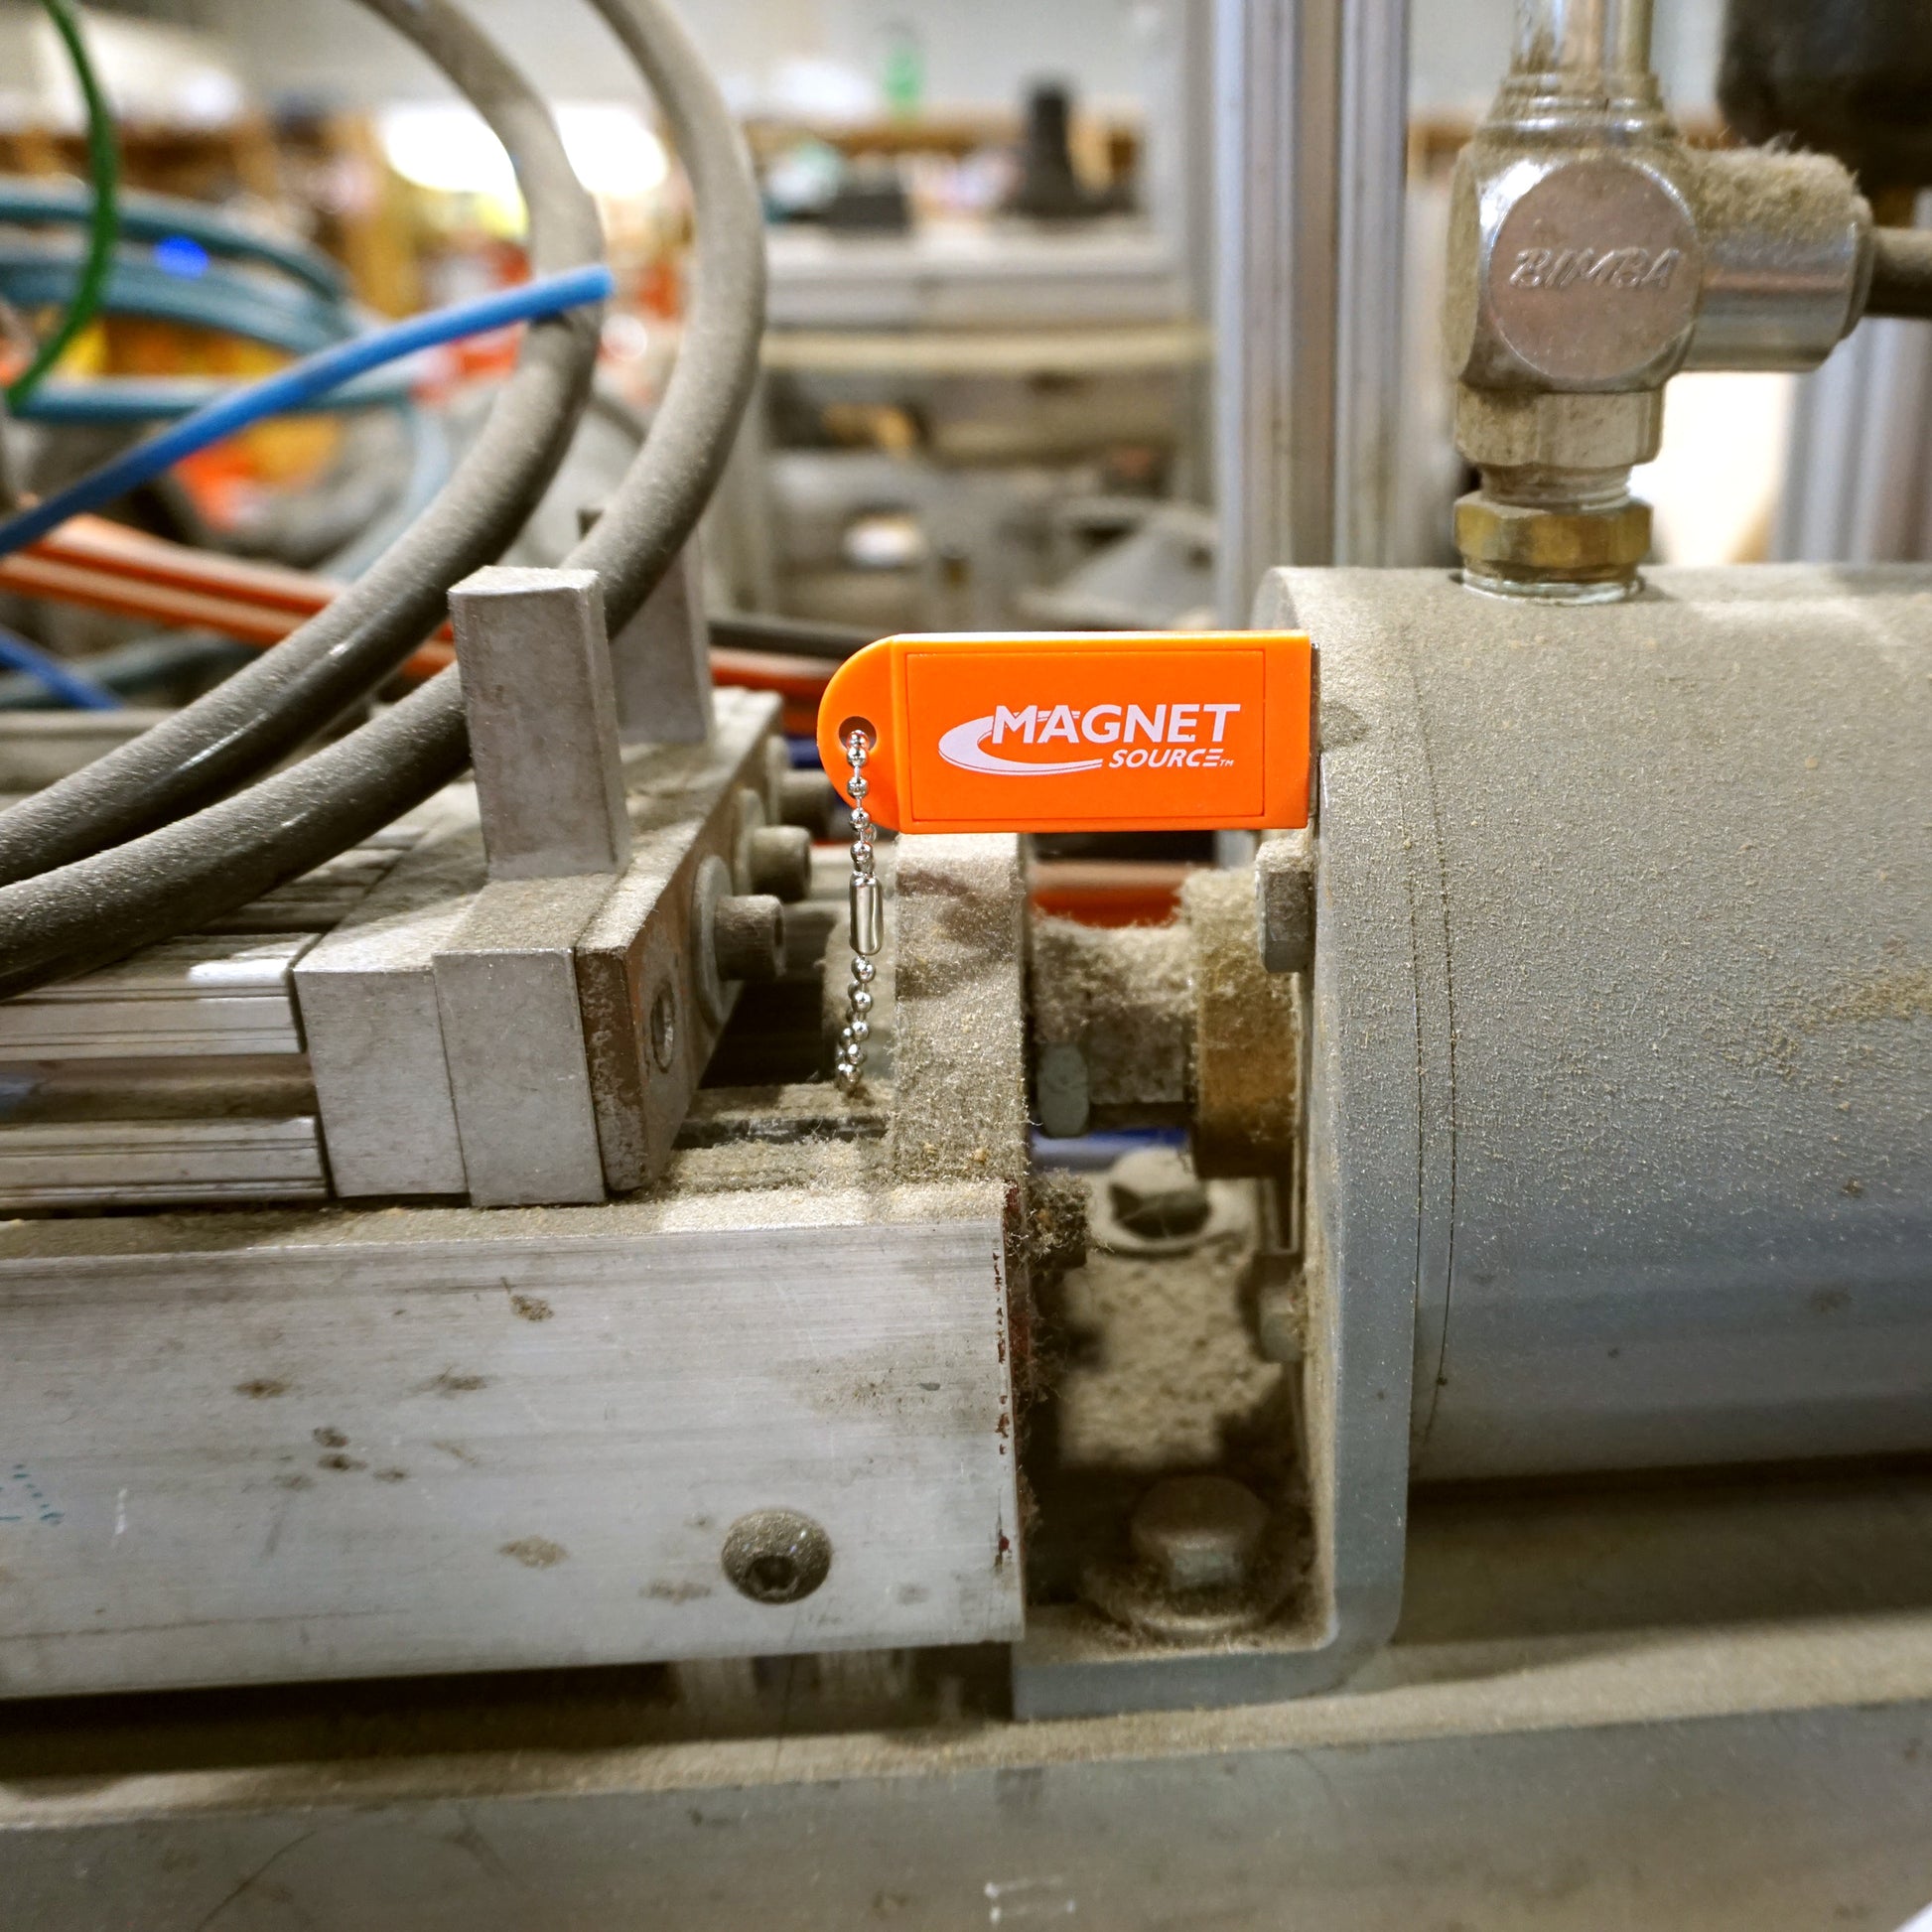 Load image into Gallery viewer, KCMO-BULK Neodymium Key Chain Magnet with Logo, Orange - Testing Orange Magnet on Junk